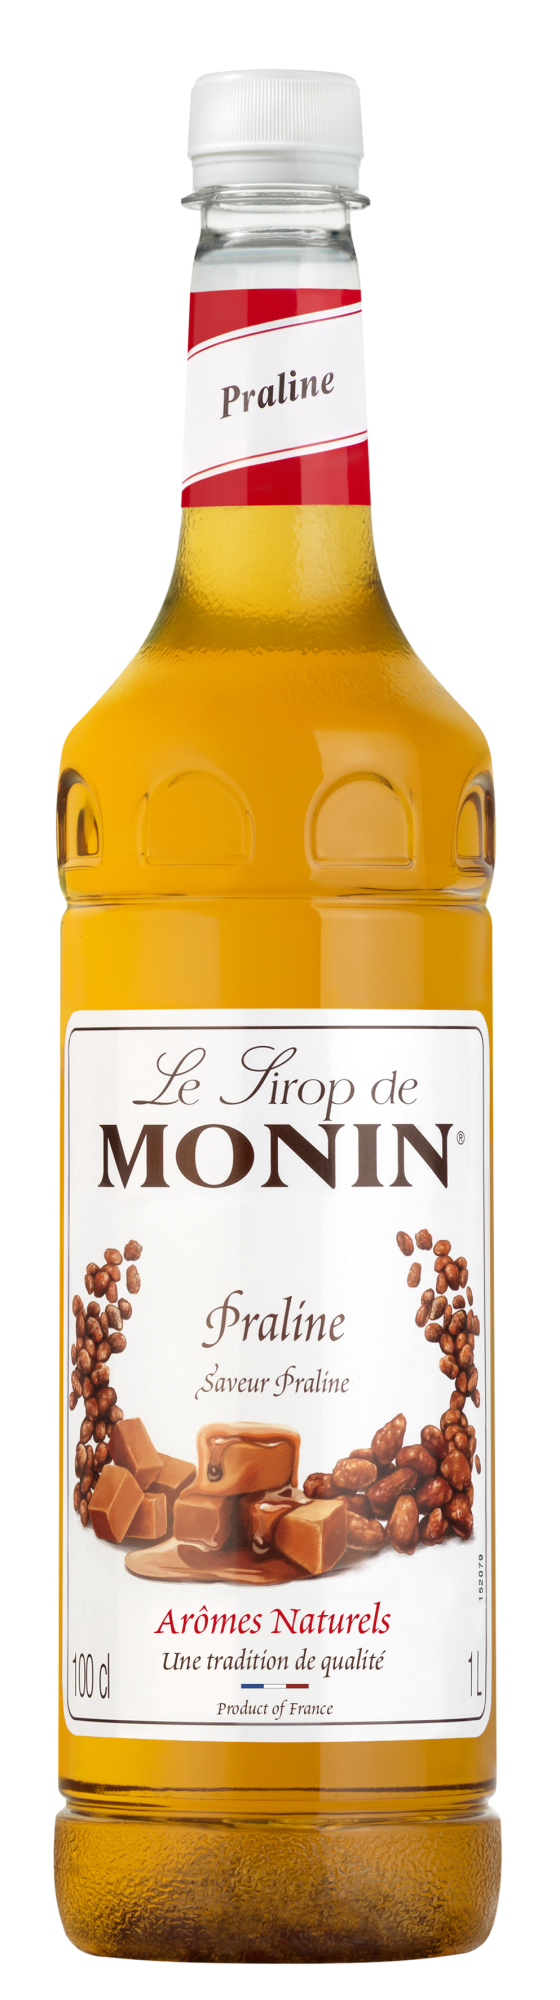 MONIN Premium Praline Syrup 1L